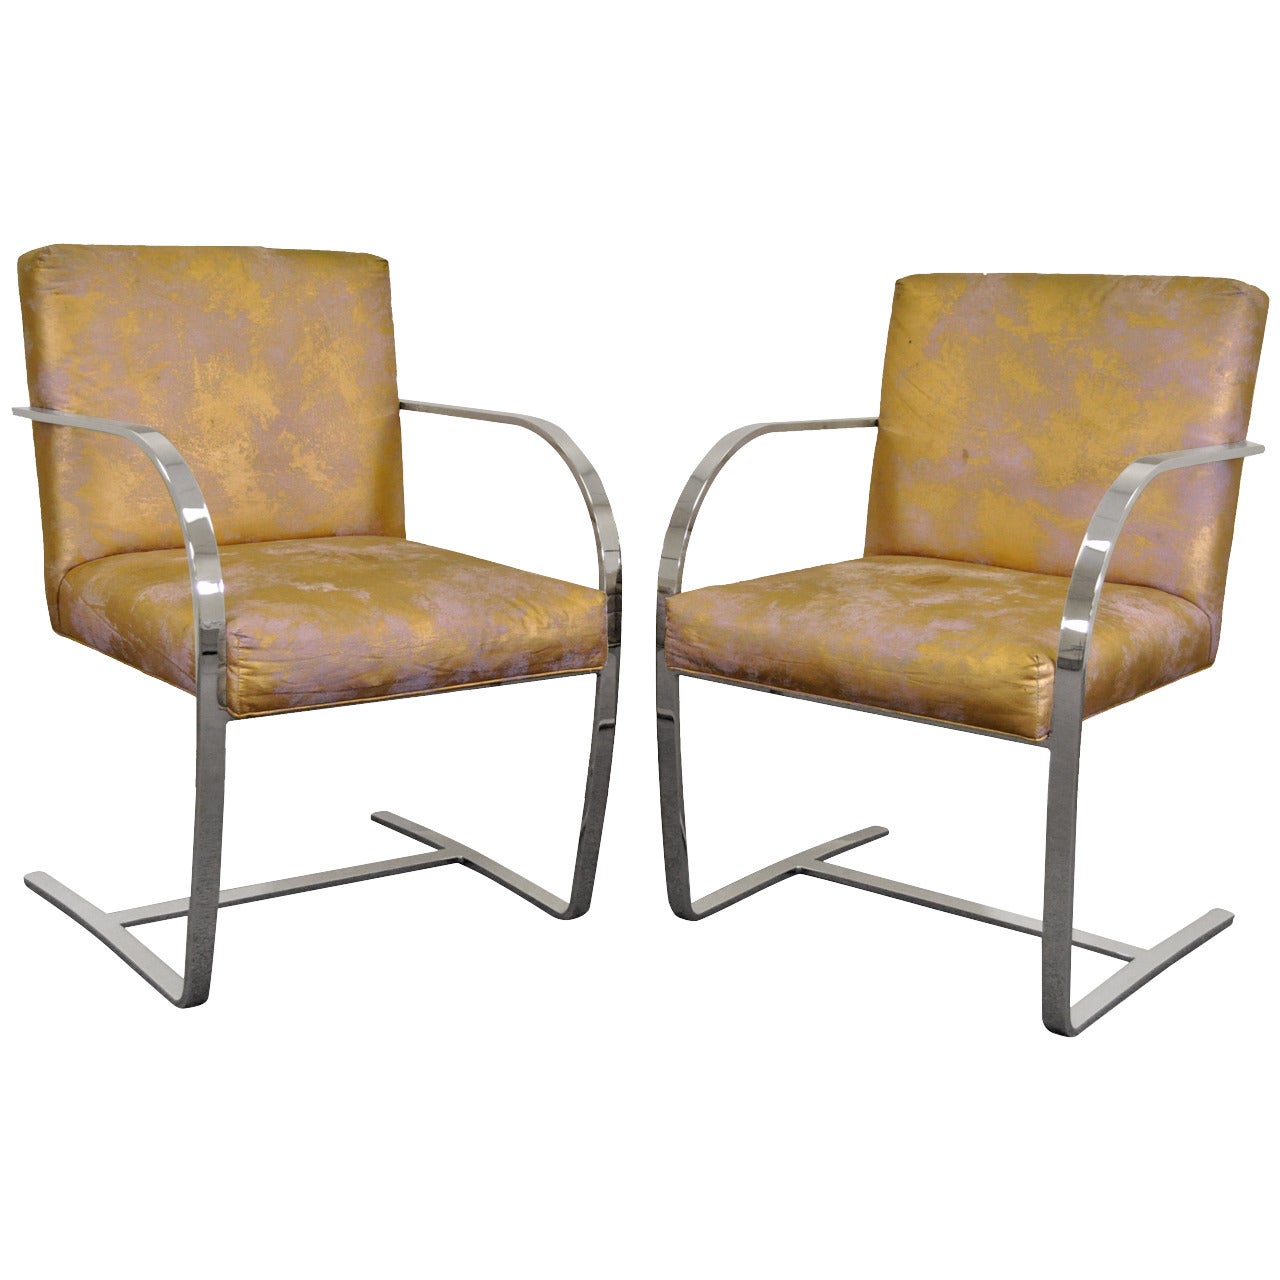 Pair of Cy Mann Flatbar Chrome Brno Style Chairs after Knoll Mies Van Der Rohe